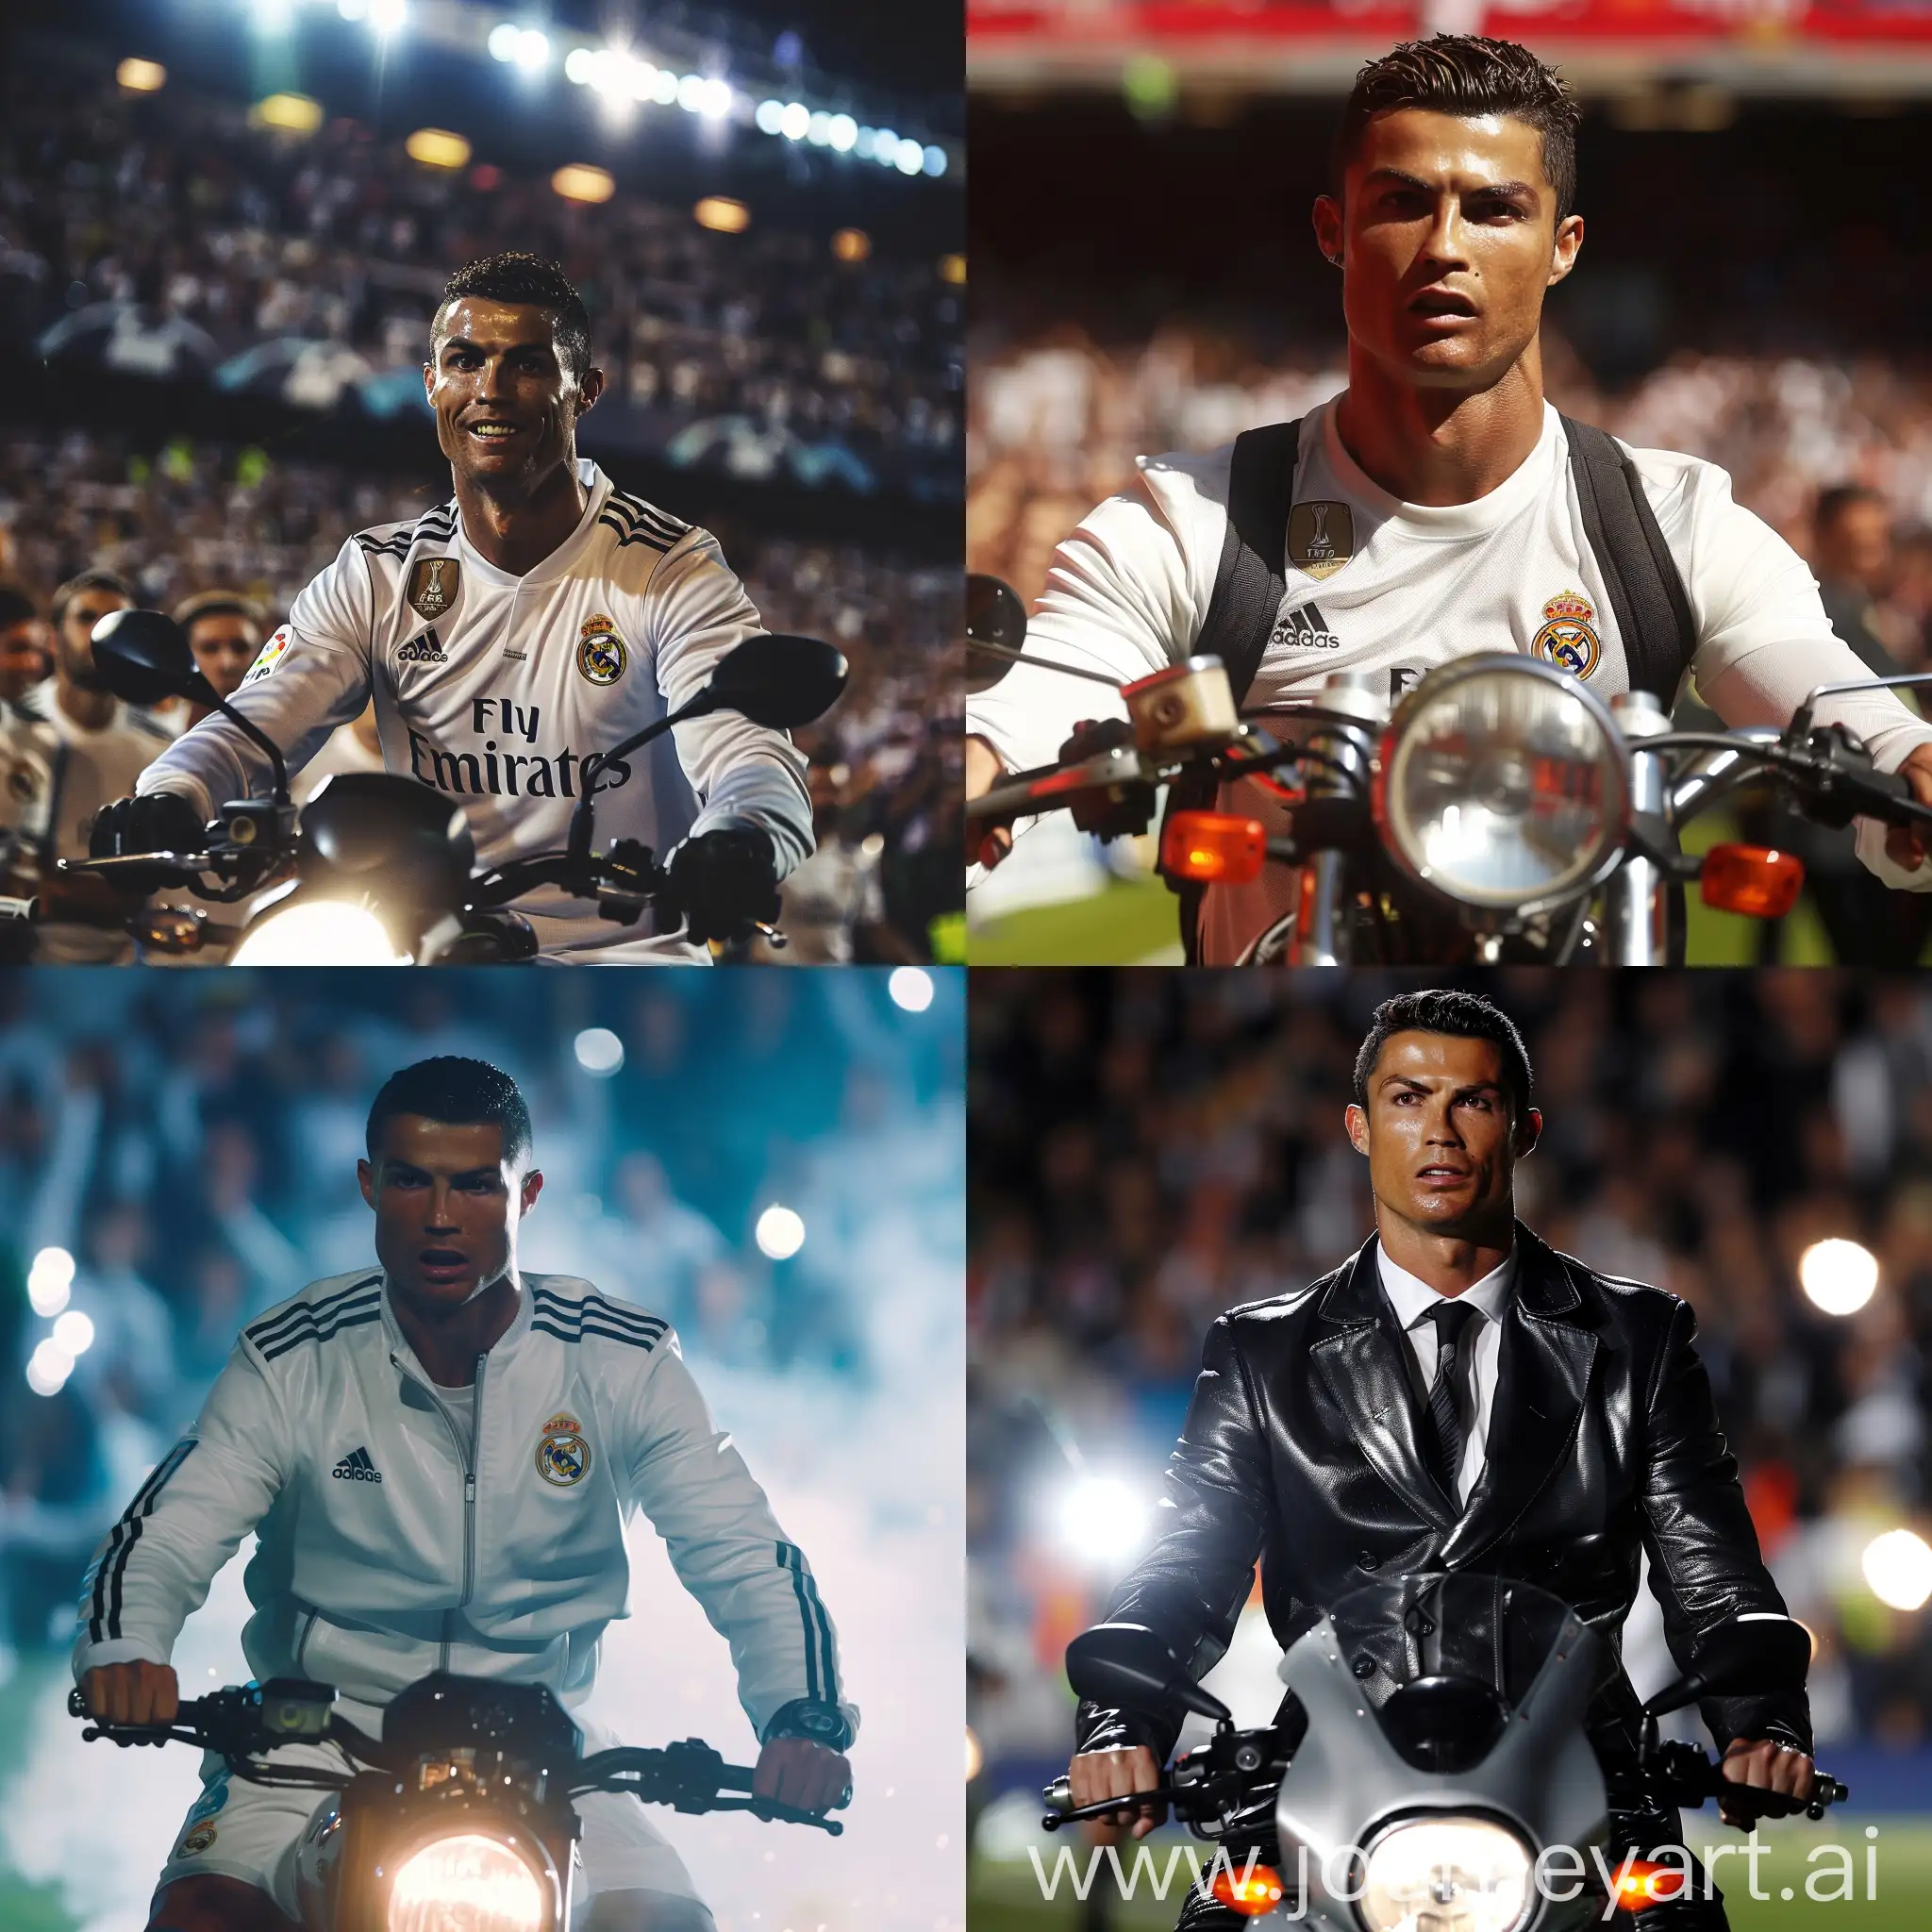 Cristiano-Ronaldo-Arrives-at-Stadium-on-Motorbike